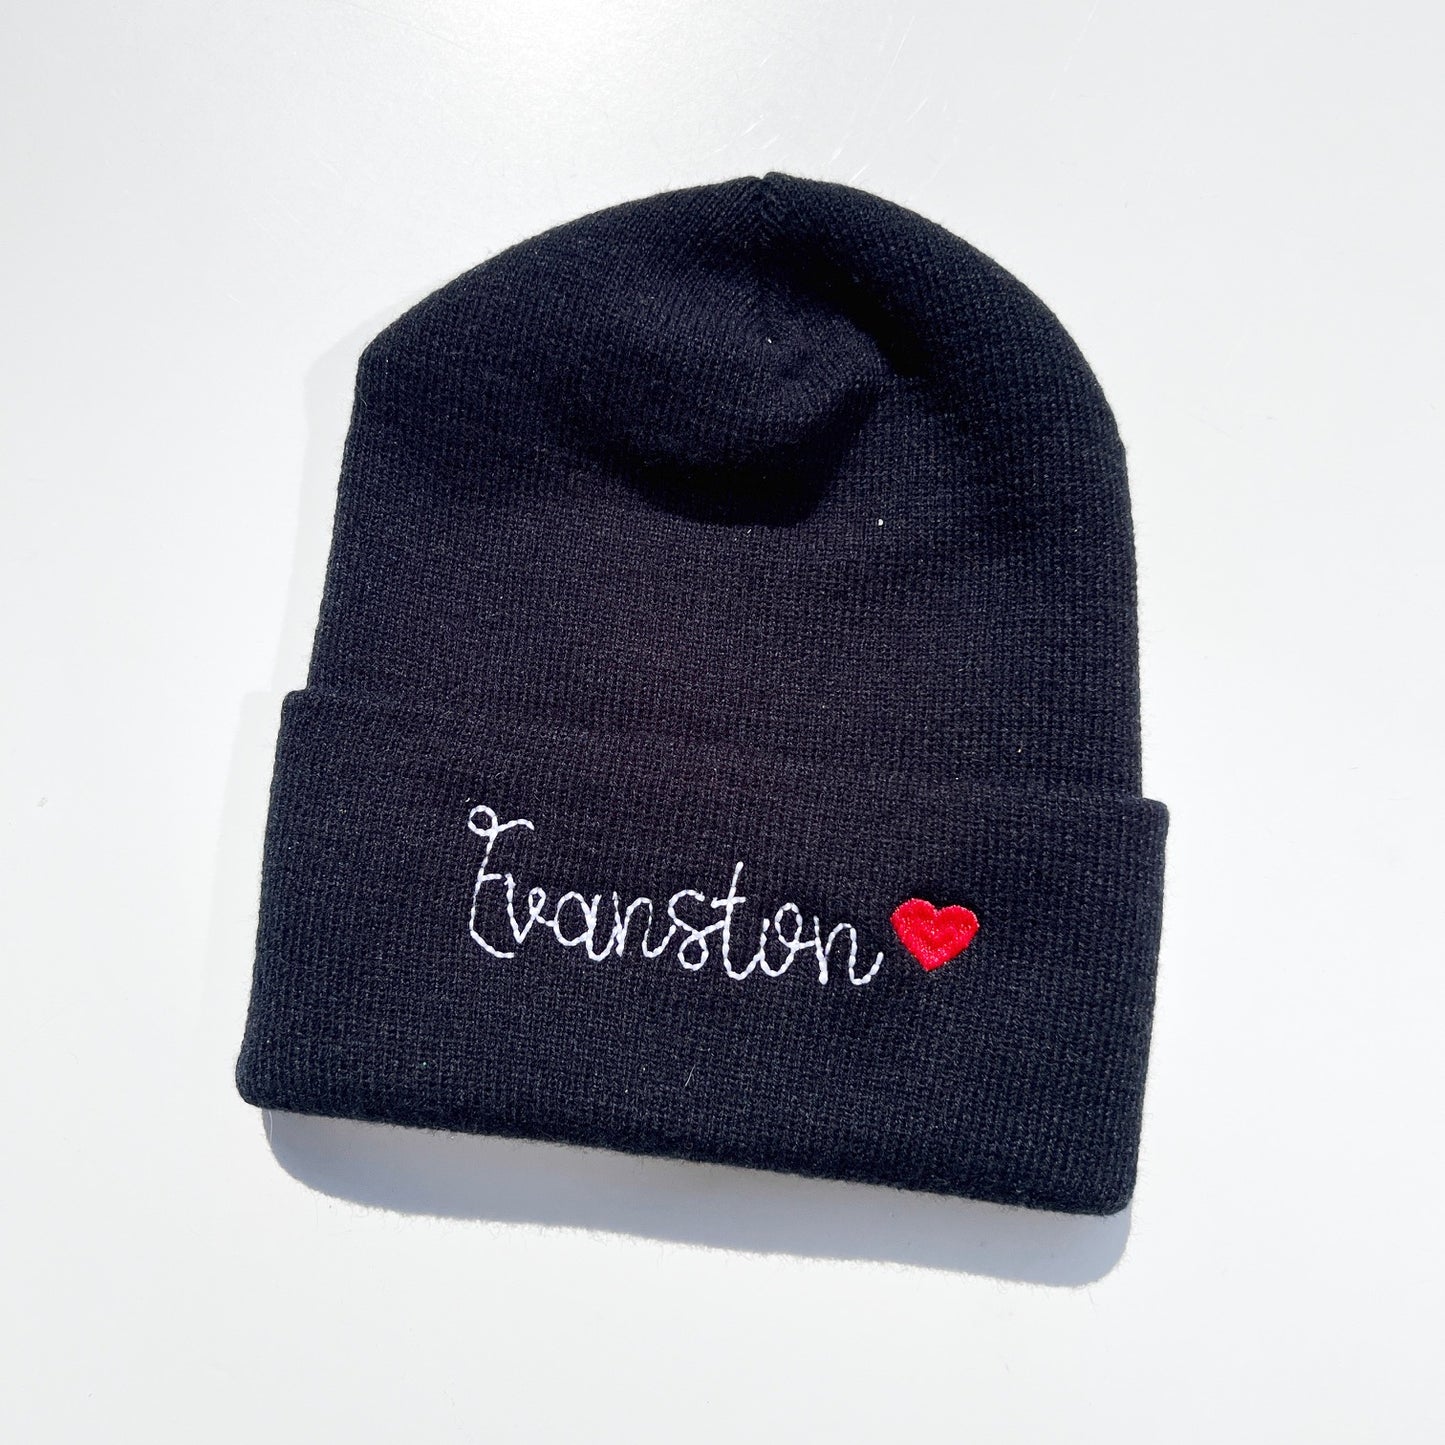 Evanston Knitted Hat